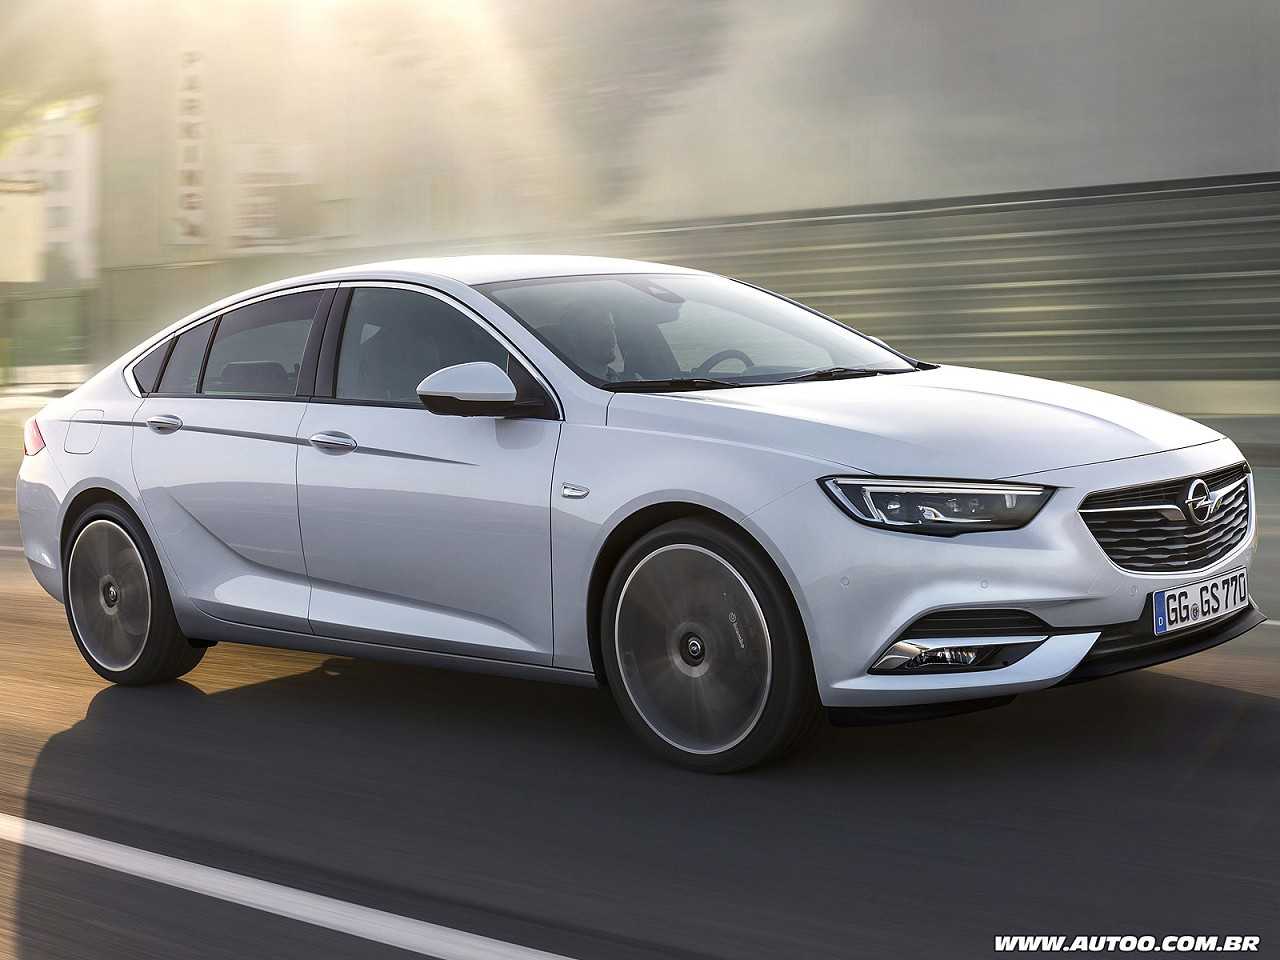 Opel Insignia Grand Sport, o sucessor do Vectra na Europa